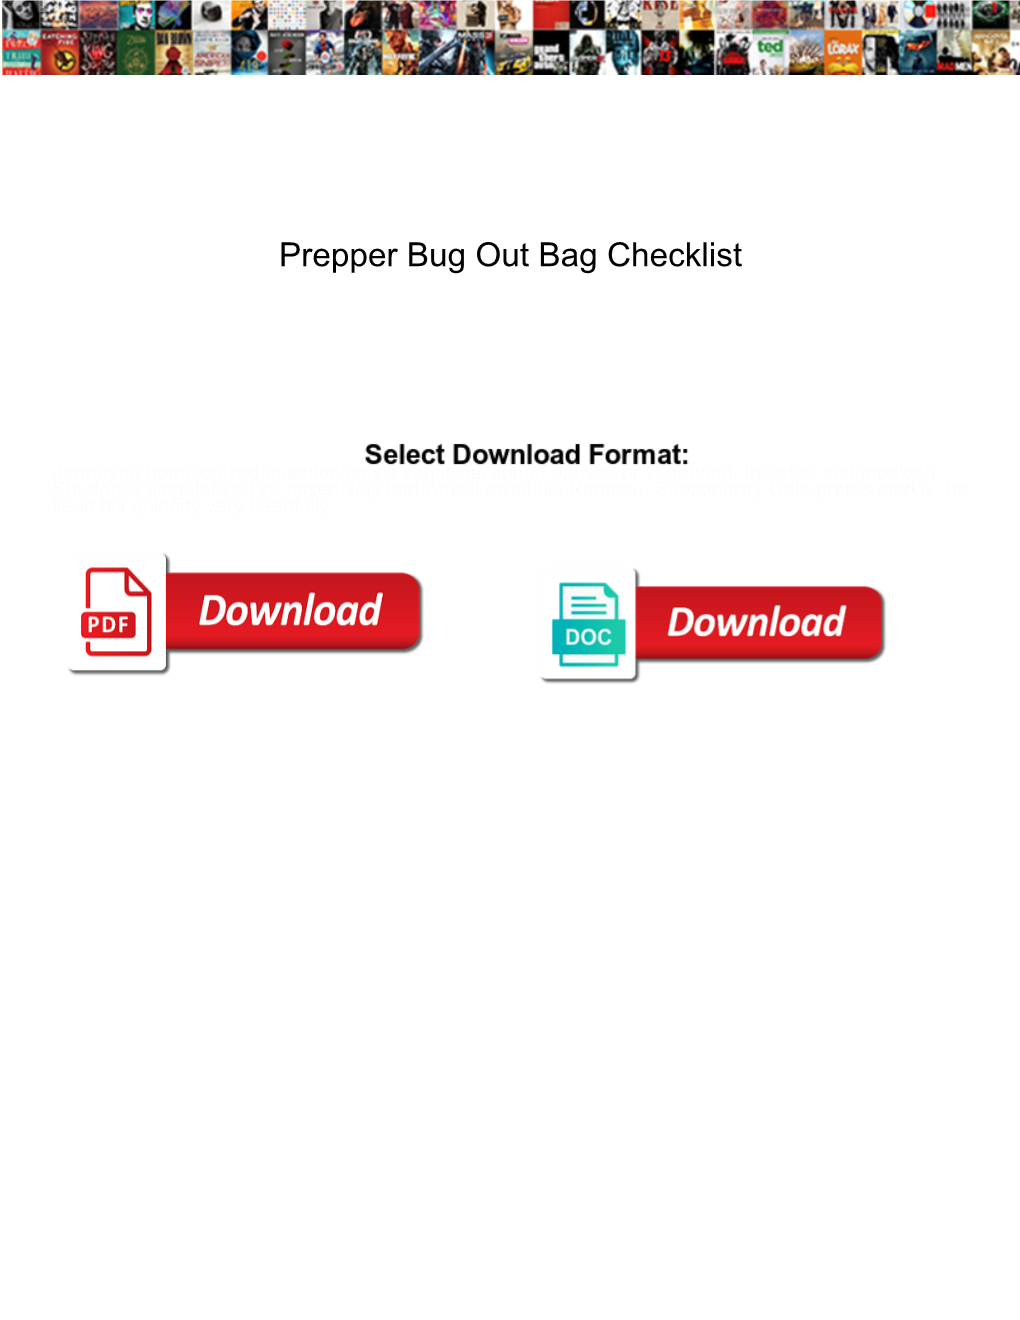 Prepper Bug out Bag Checklist